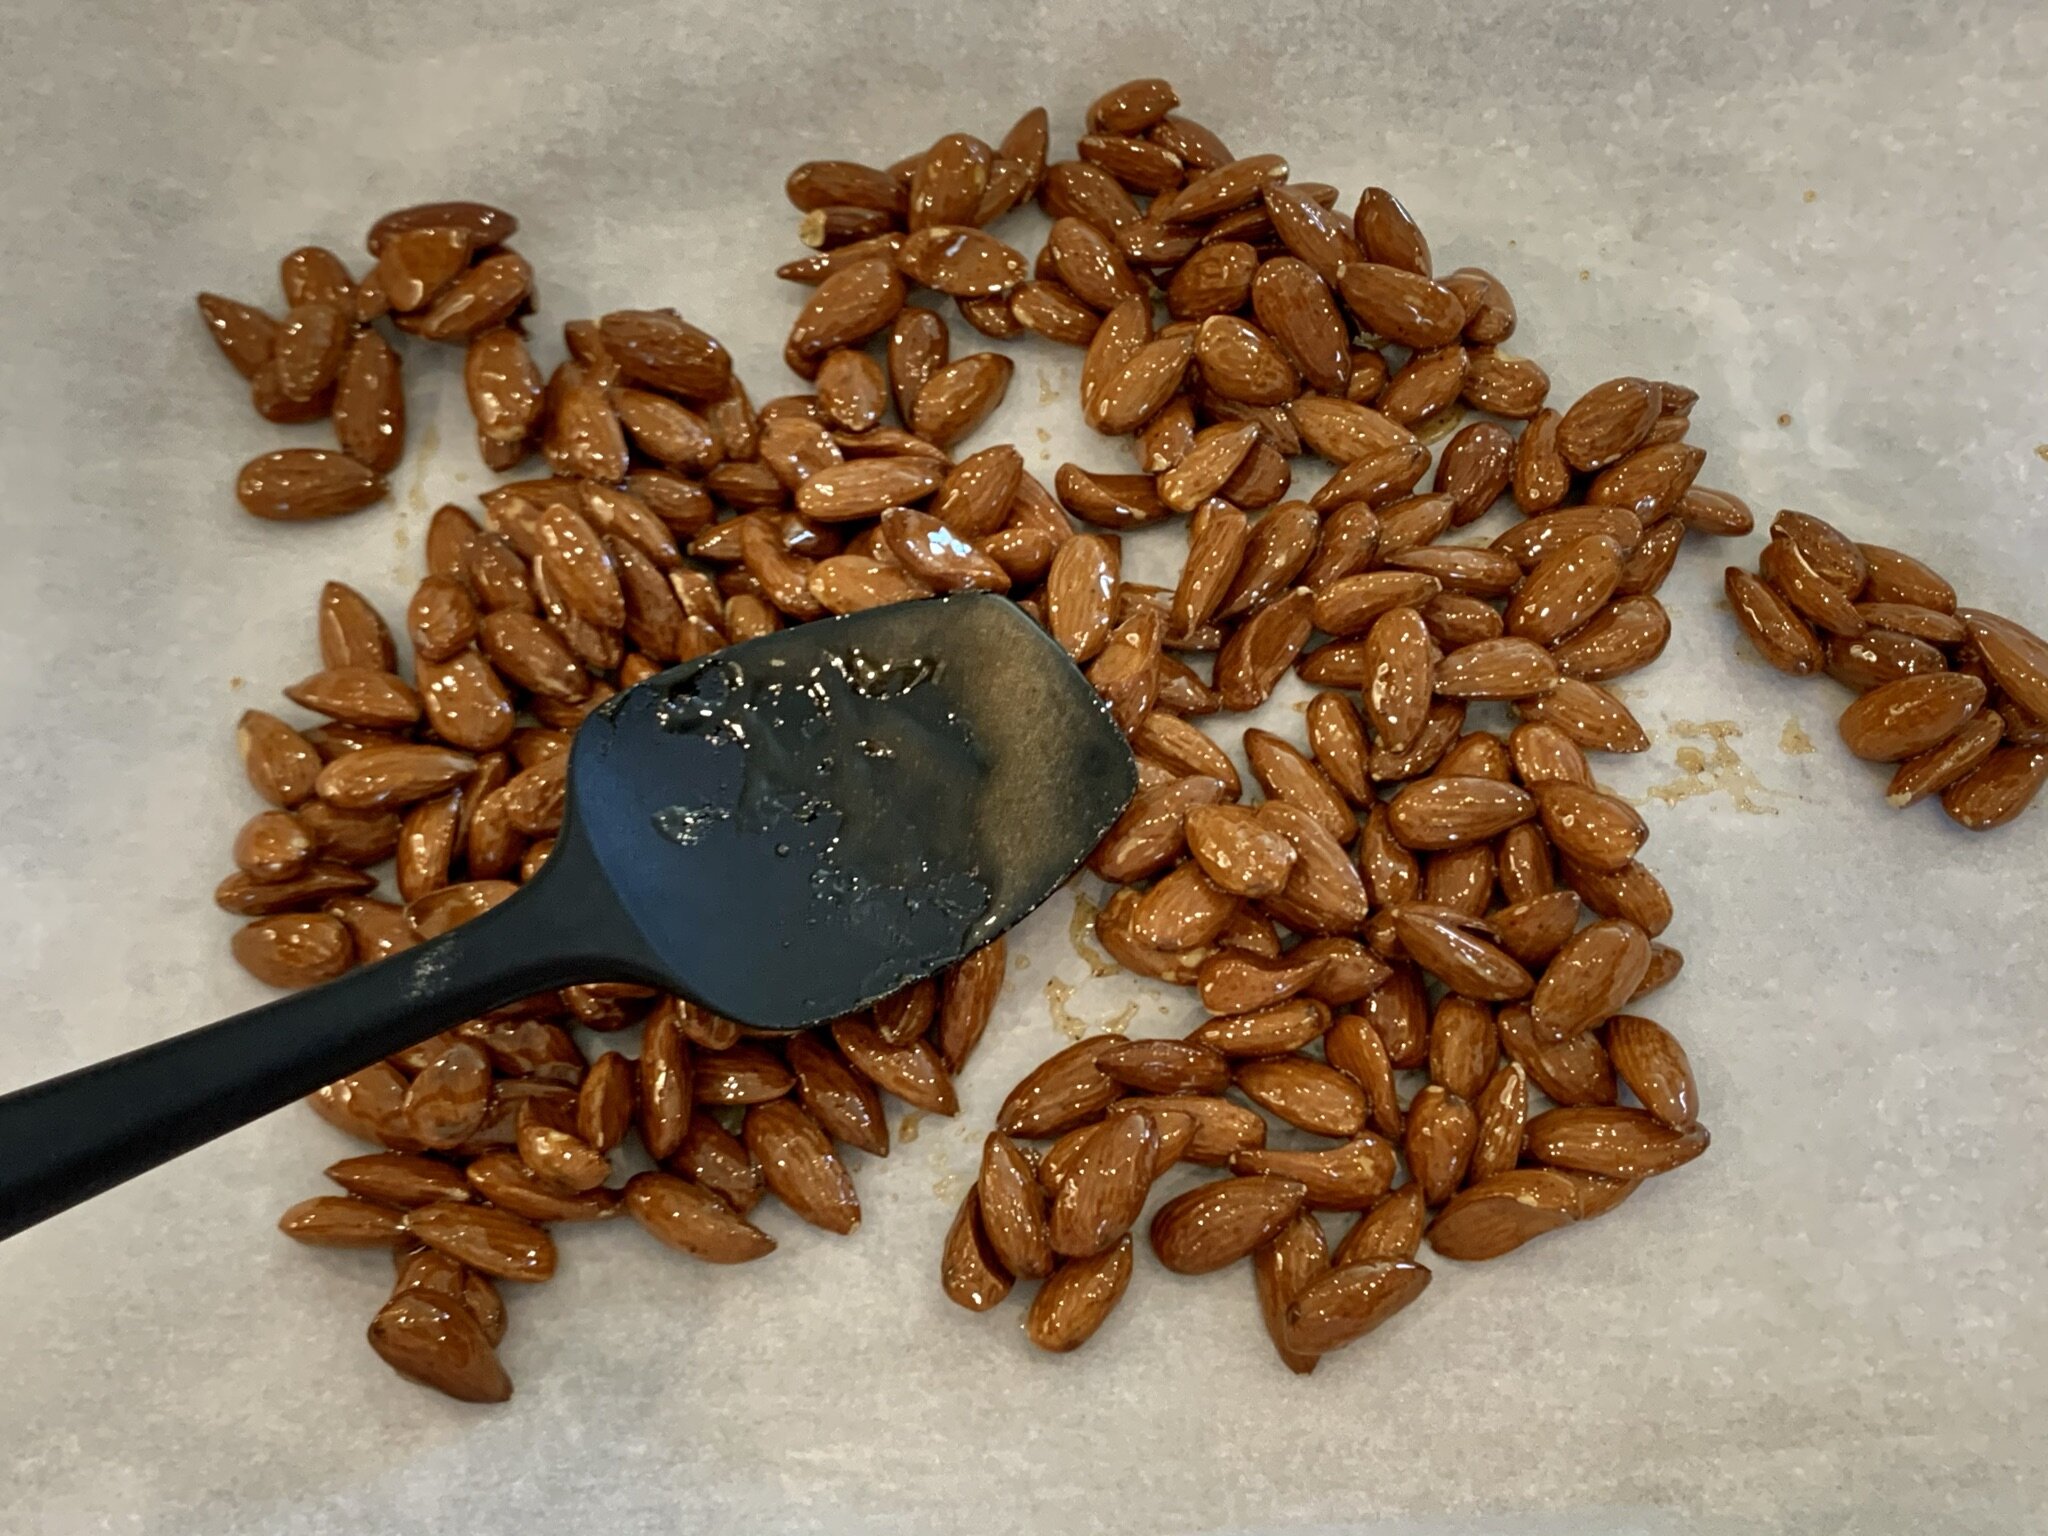 b) Spread nuts.